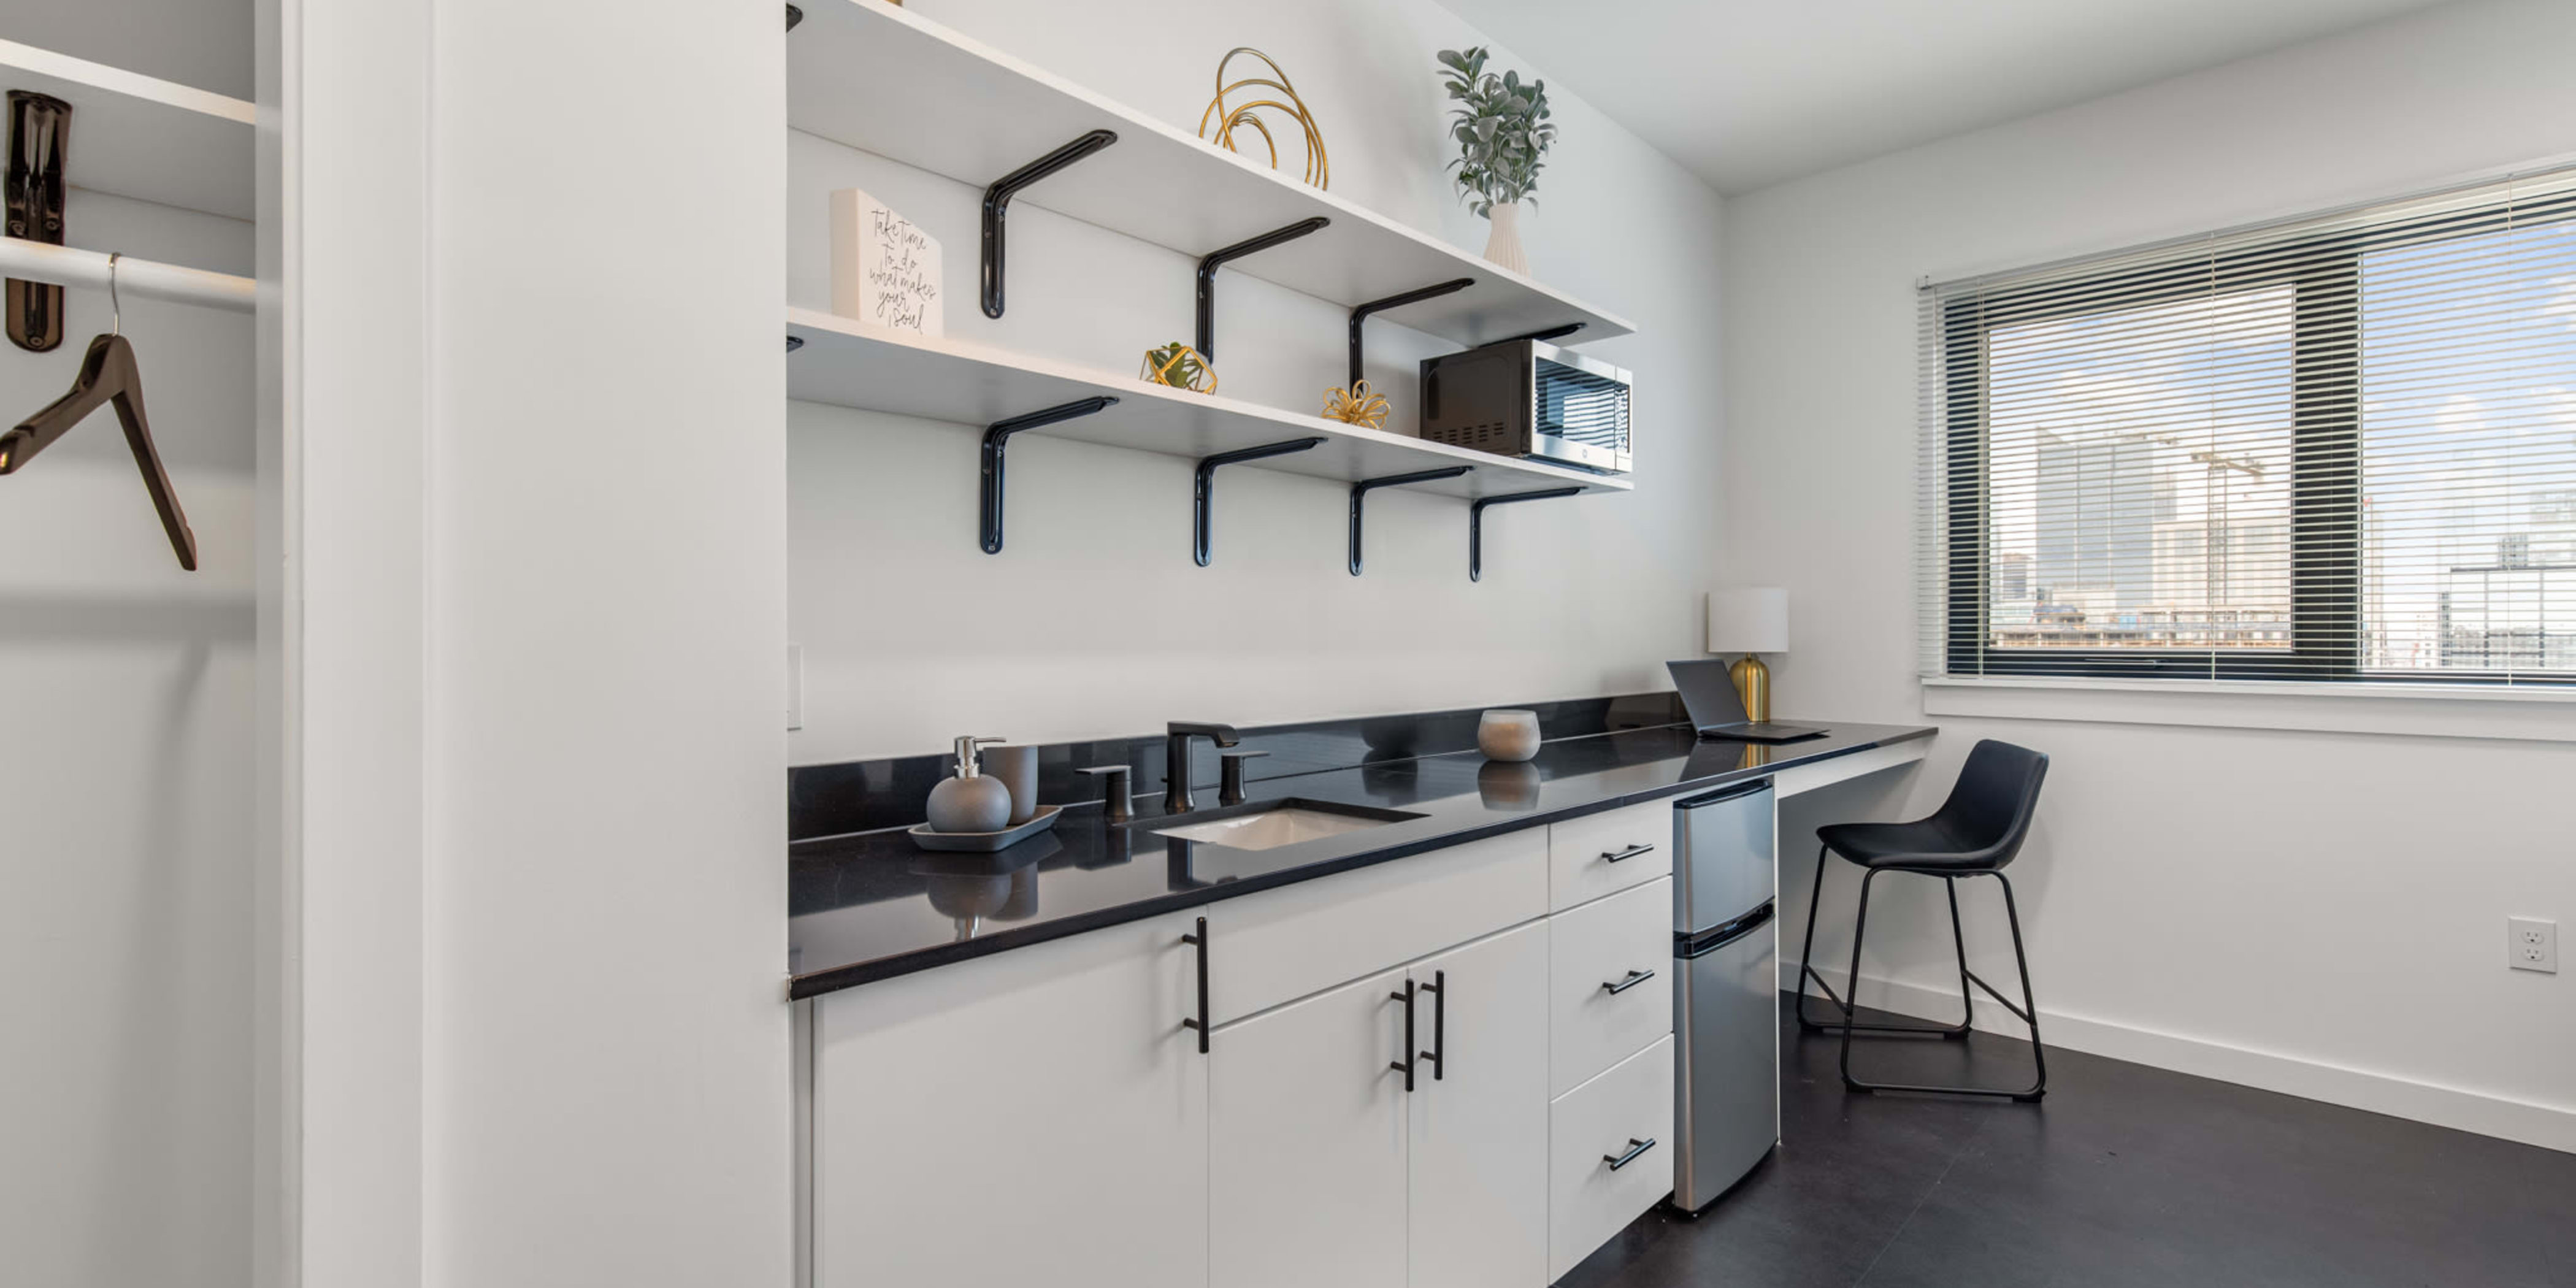 Studio apartment kitchen at Rutledge Flats | Apartments in Nashville, TN